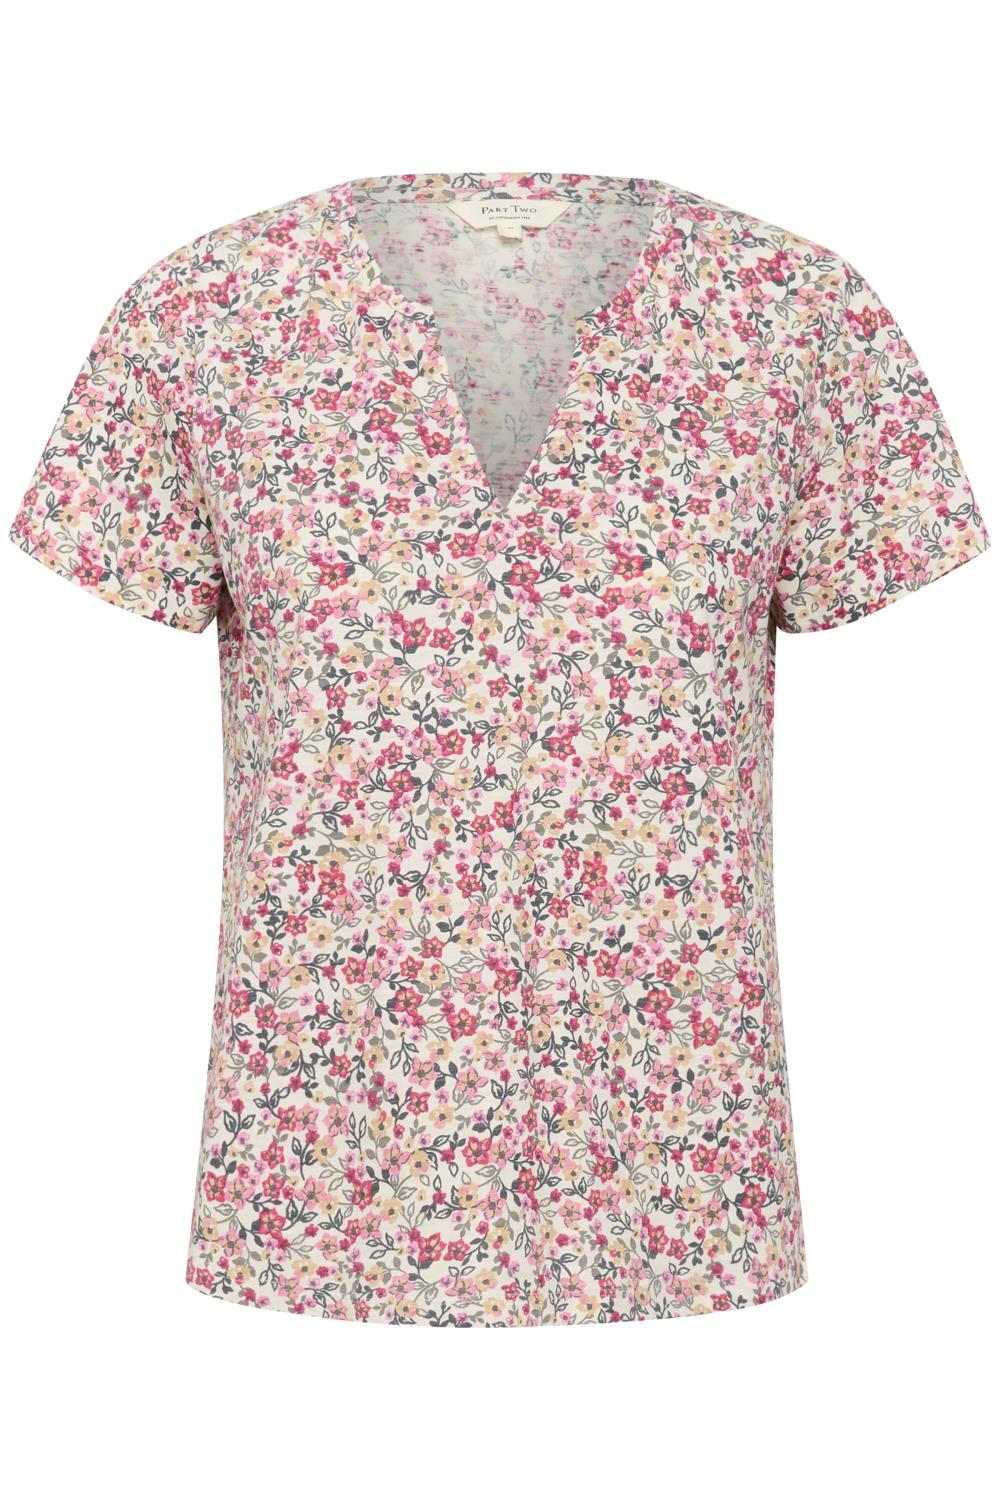 Part Two Gesinas T-shirt, hvit/rosa blomstret